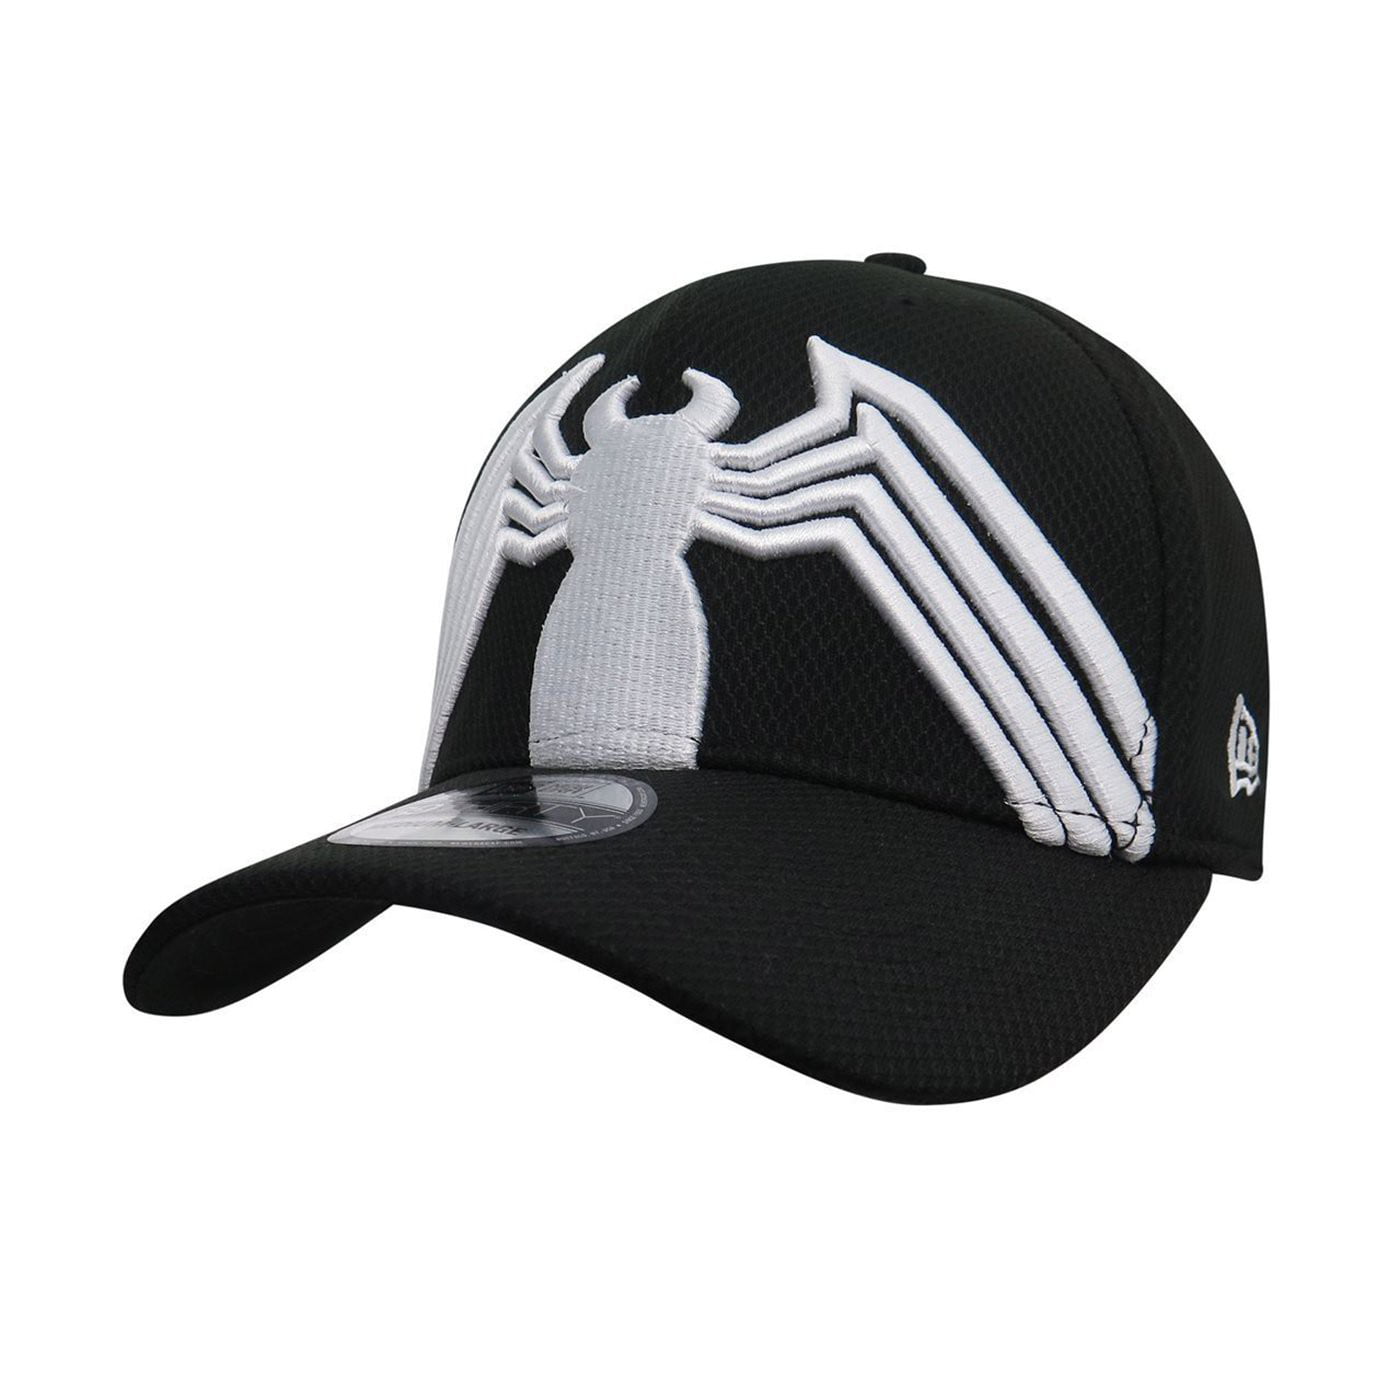 youth flat peak baseball fitted hats mens ladies Spider web snapback caps 